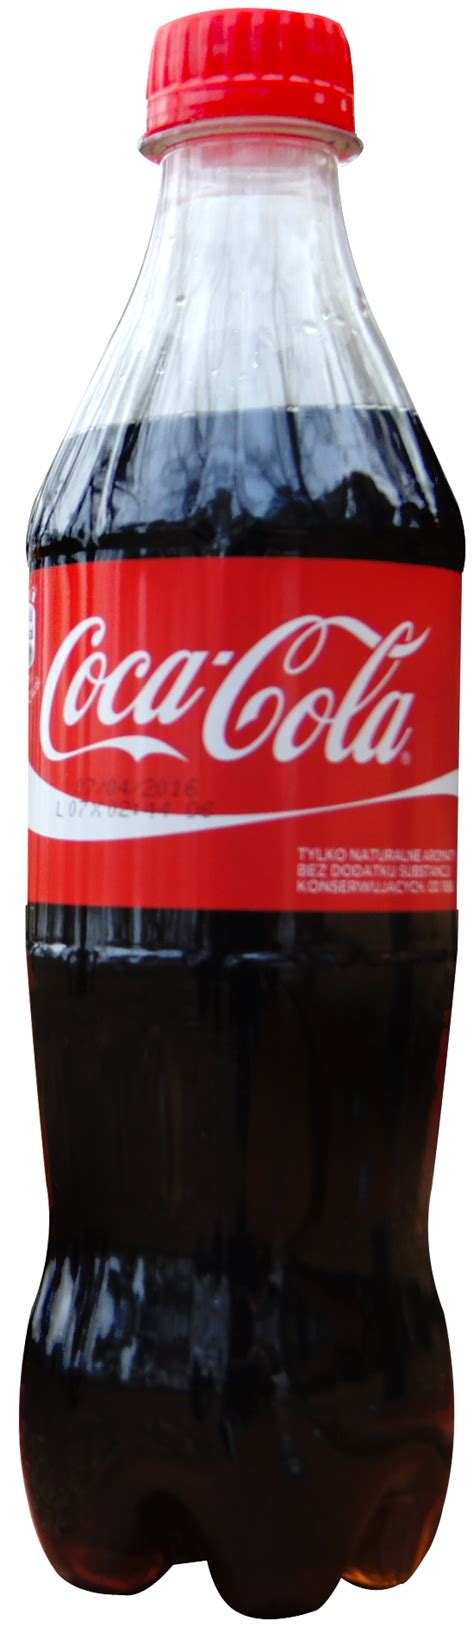 Coca Cola Png Image Purepng Free Transparent Cc0 Png Image Library